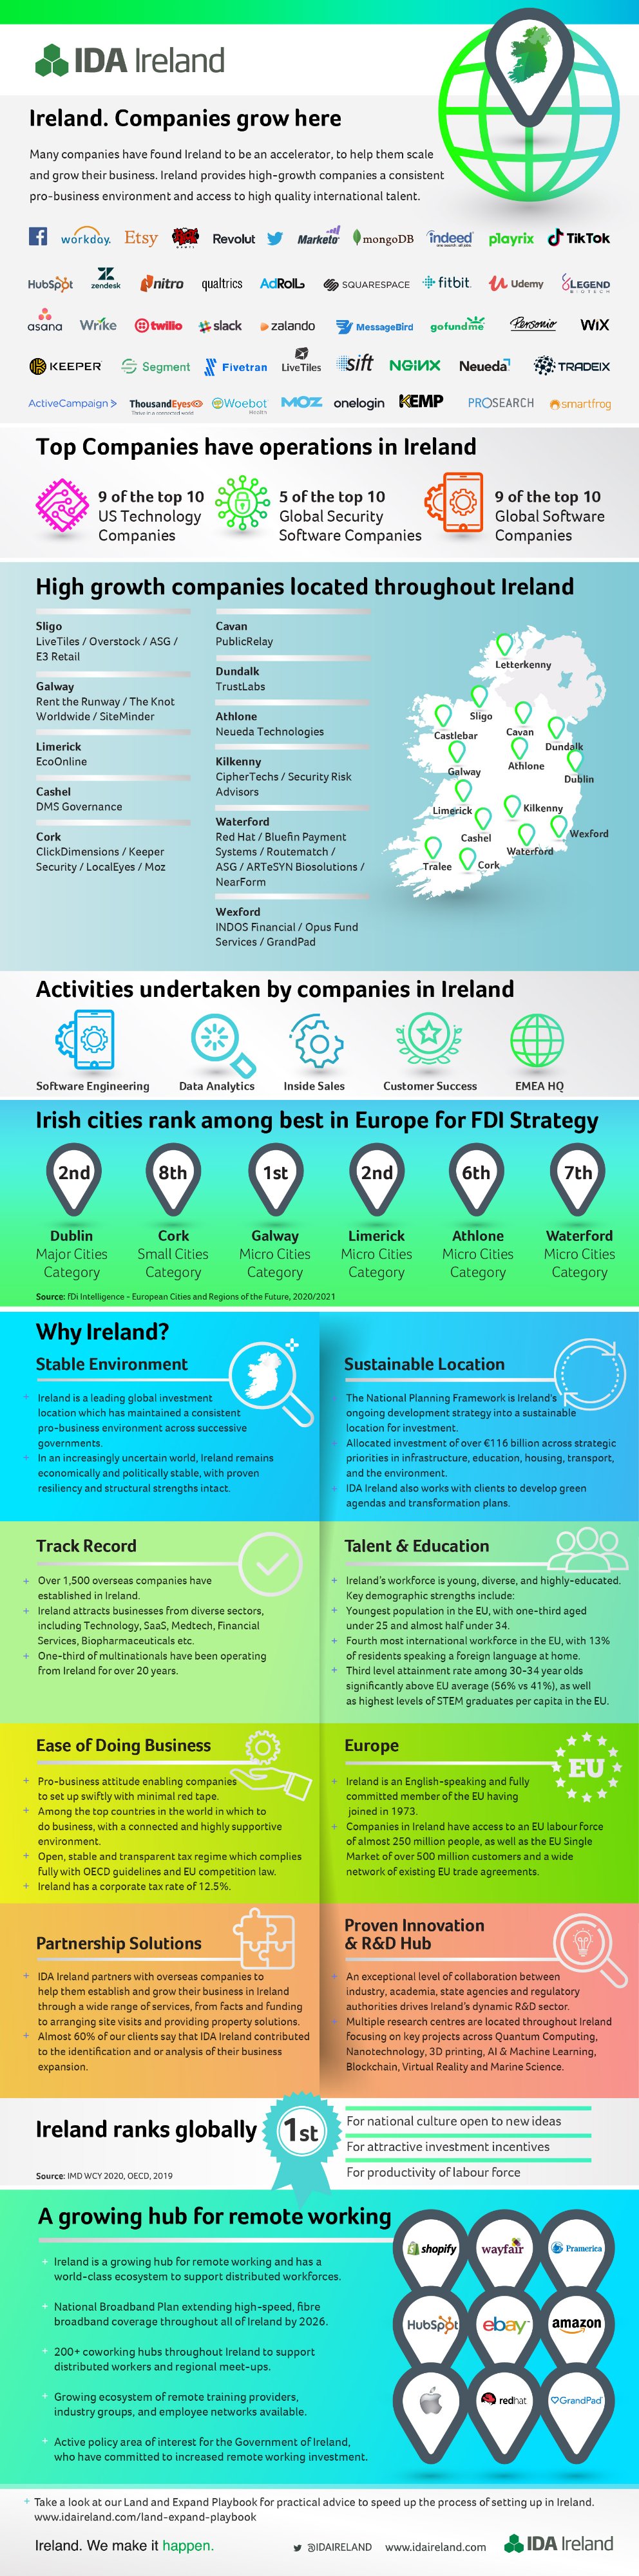 High Growth Companies in Ireland